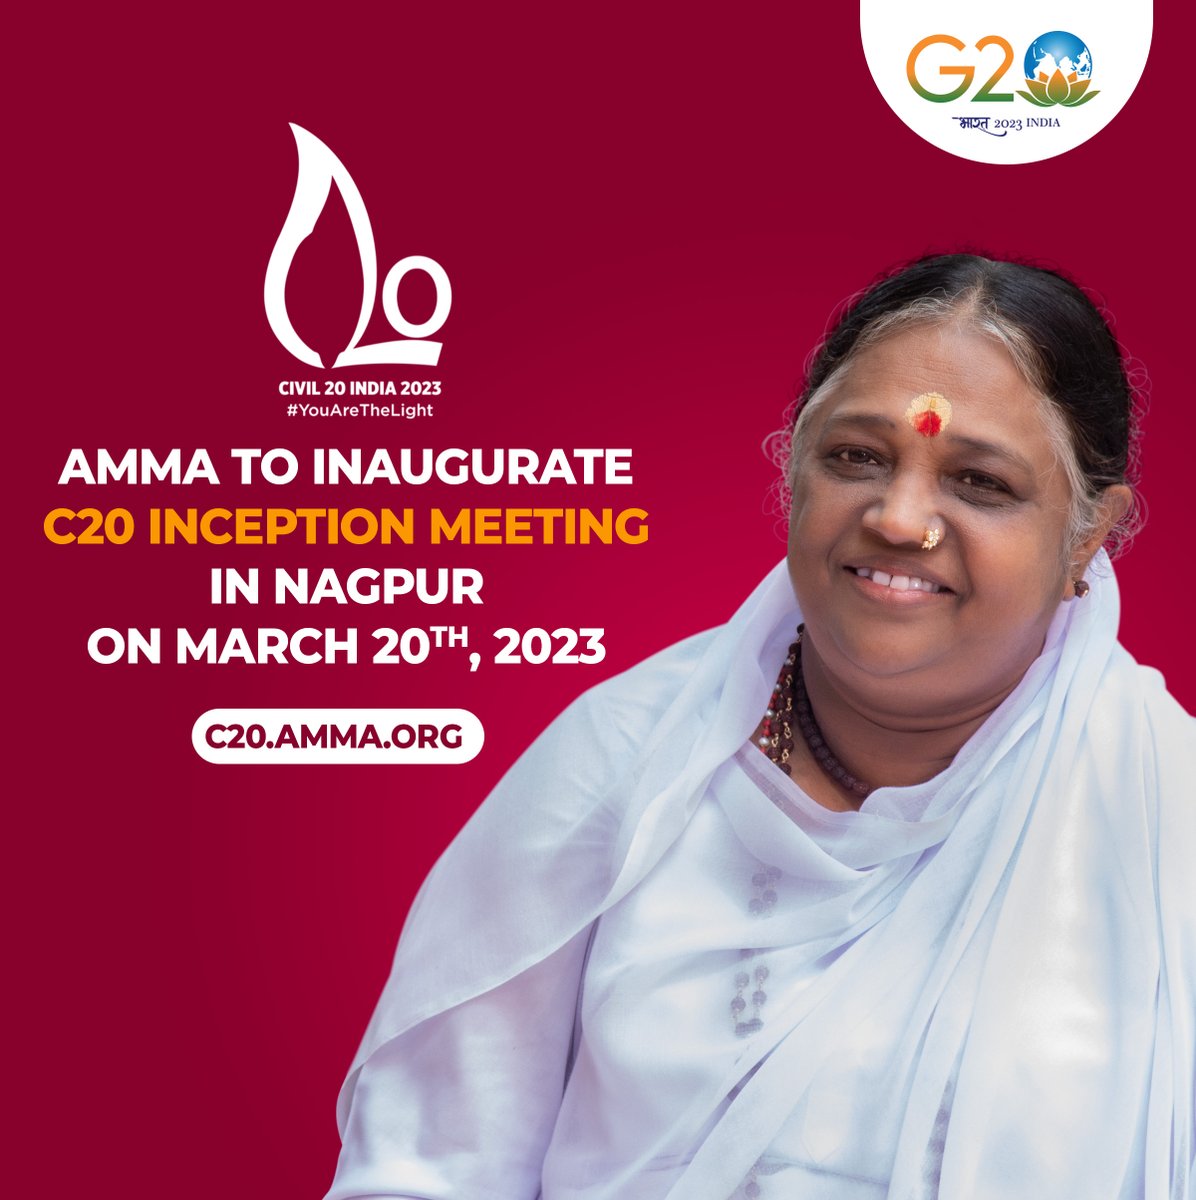 Amma @Amritanandamayi to Inaugurate C20 Inception Meeting In #Nagpur, On March 20th, 2023. web: c20.amma.org @C20EG #C20India @g20org #G20India #Civil20India2023